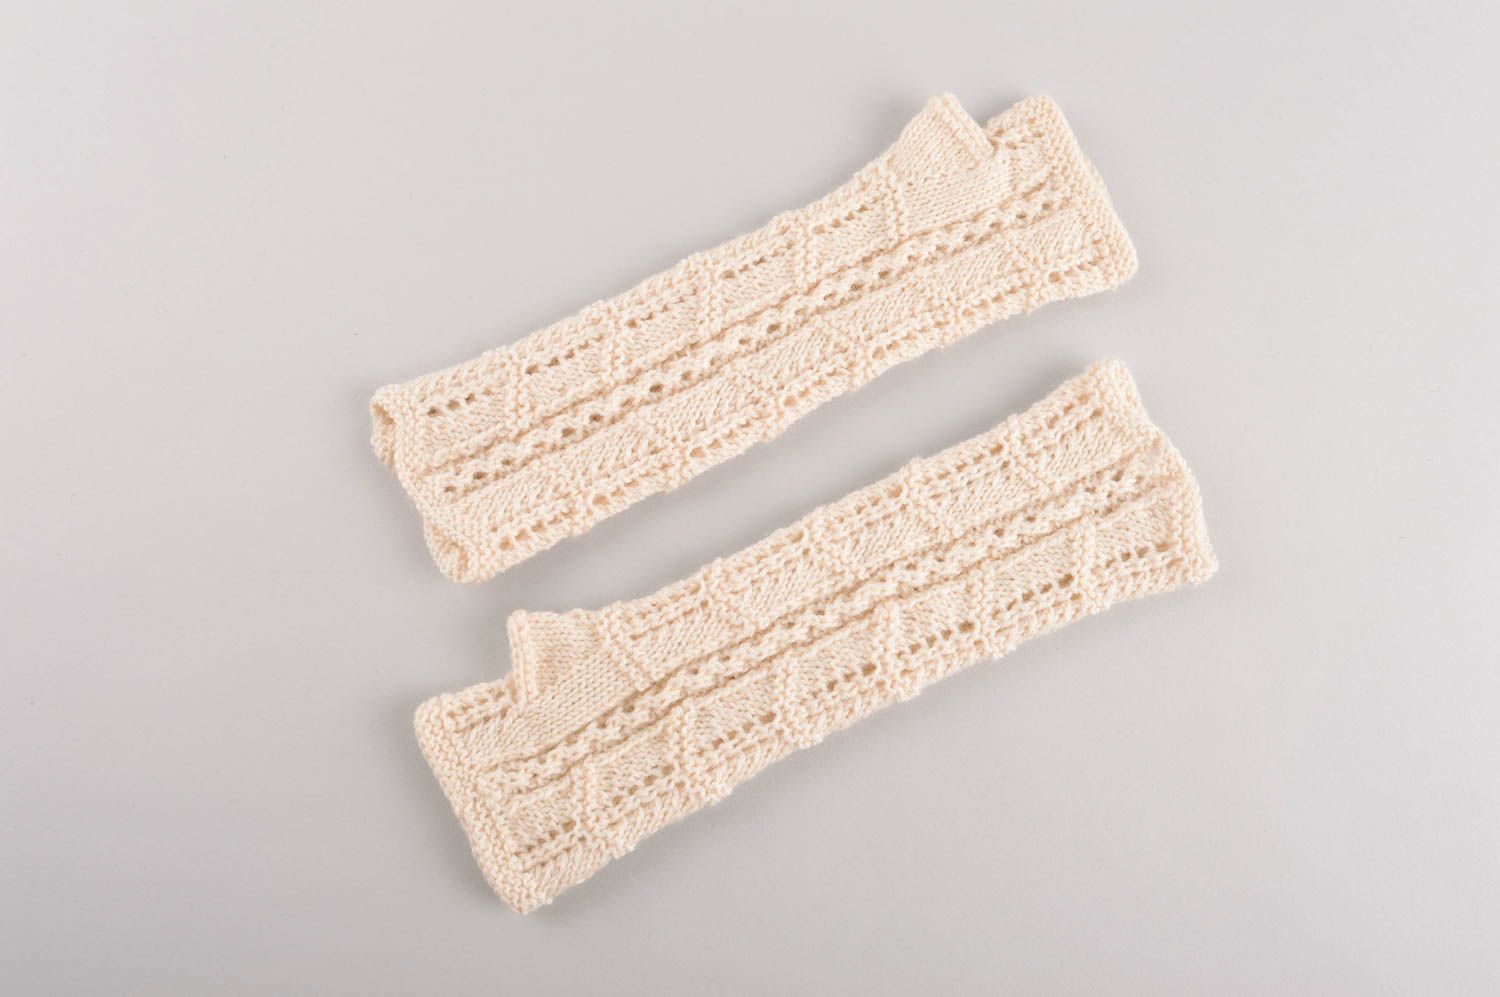 Stylish handmade crochet mittens warm wool mittens design winter outfit photo 3